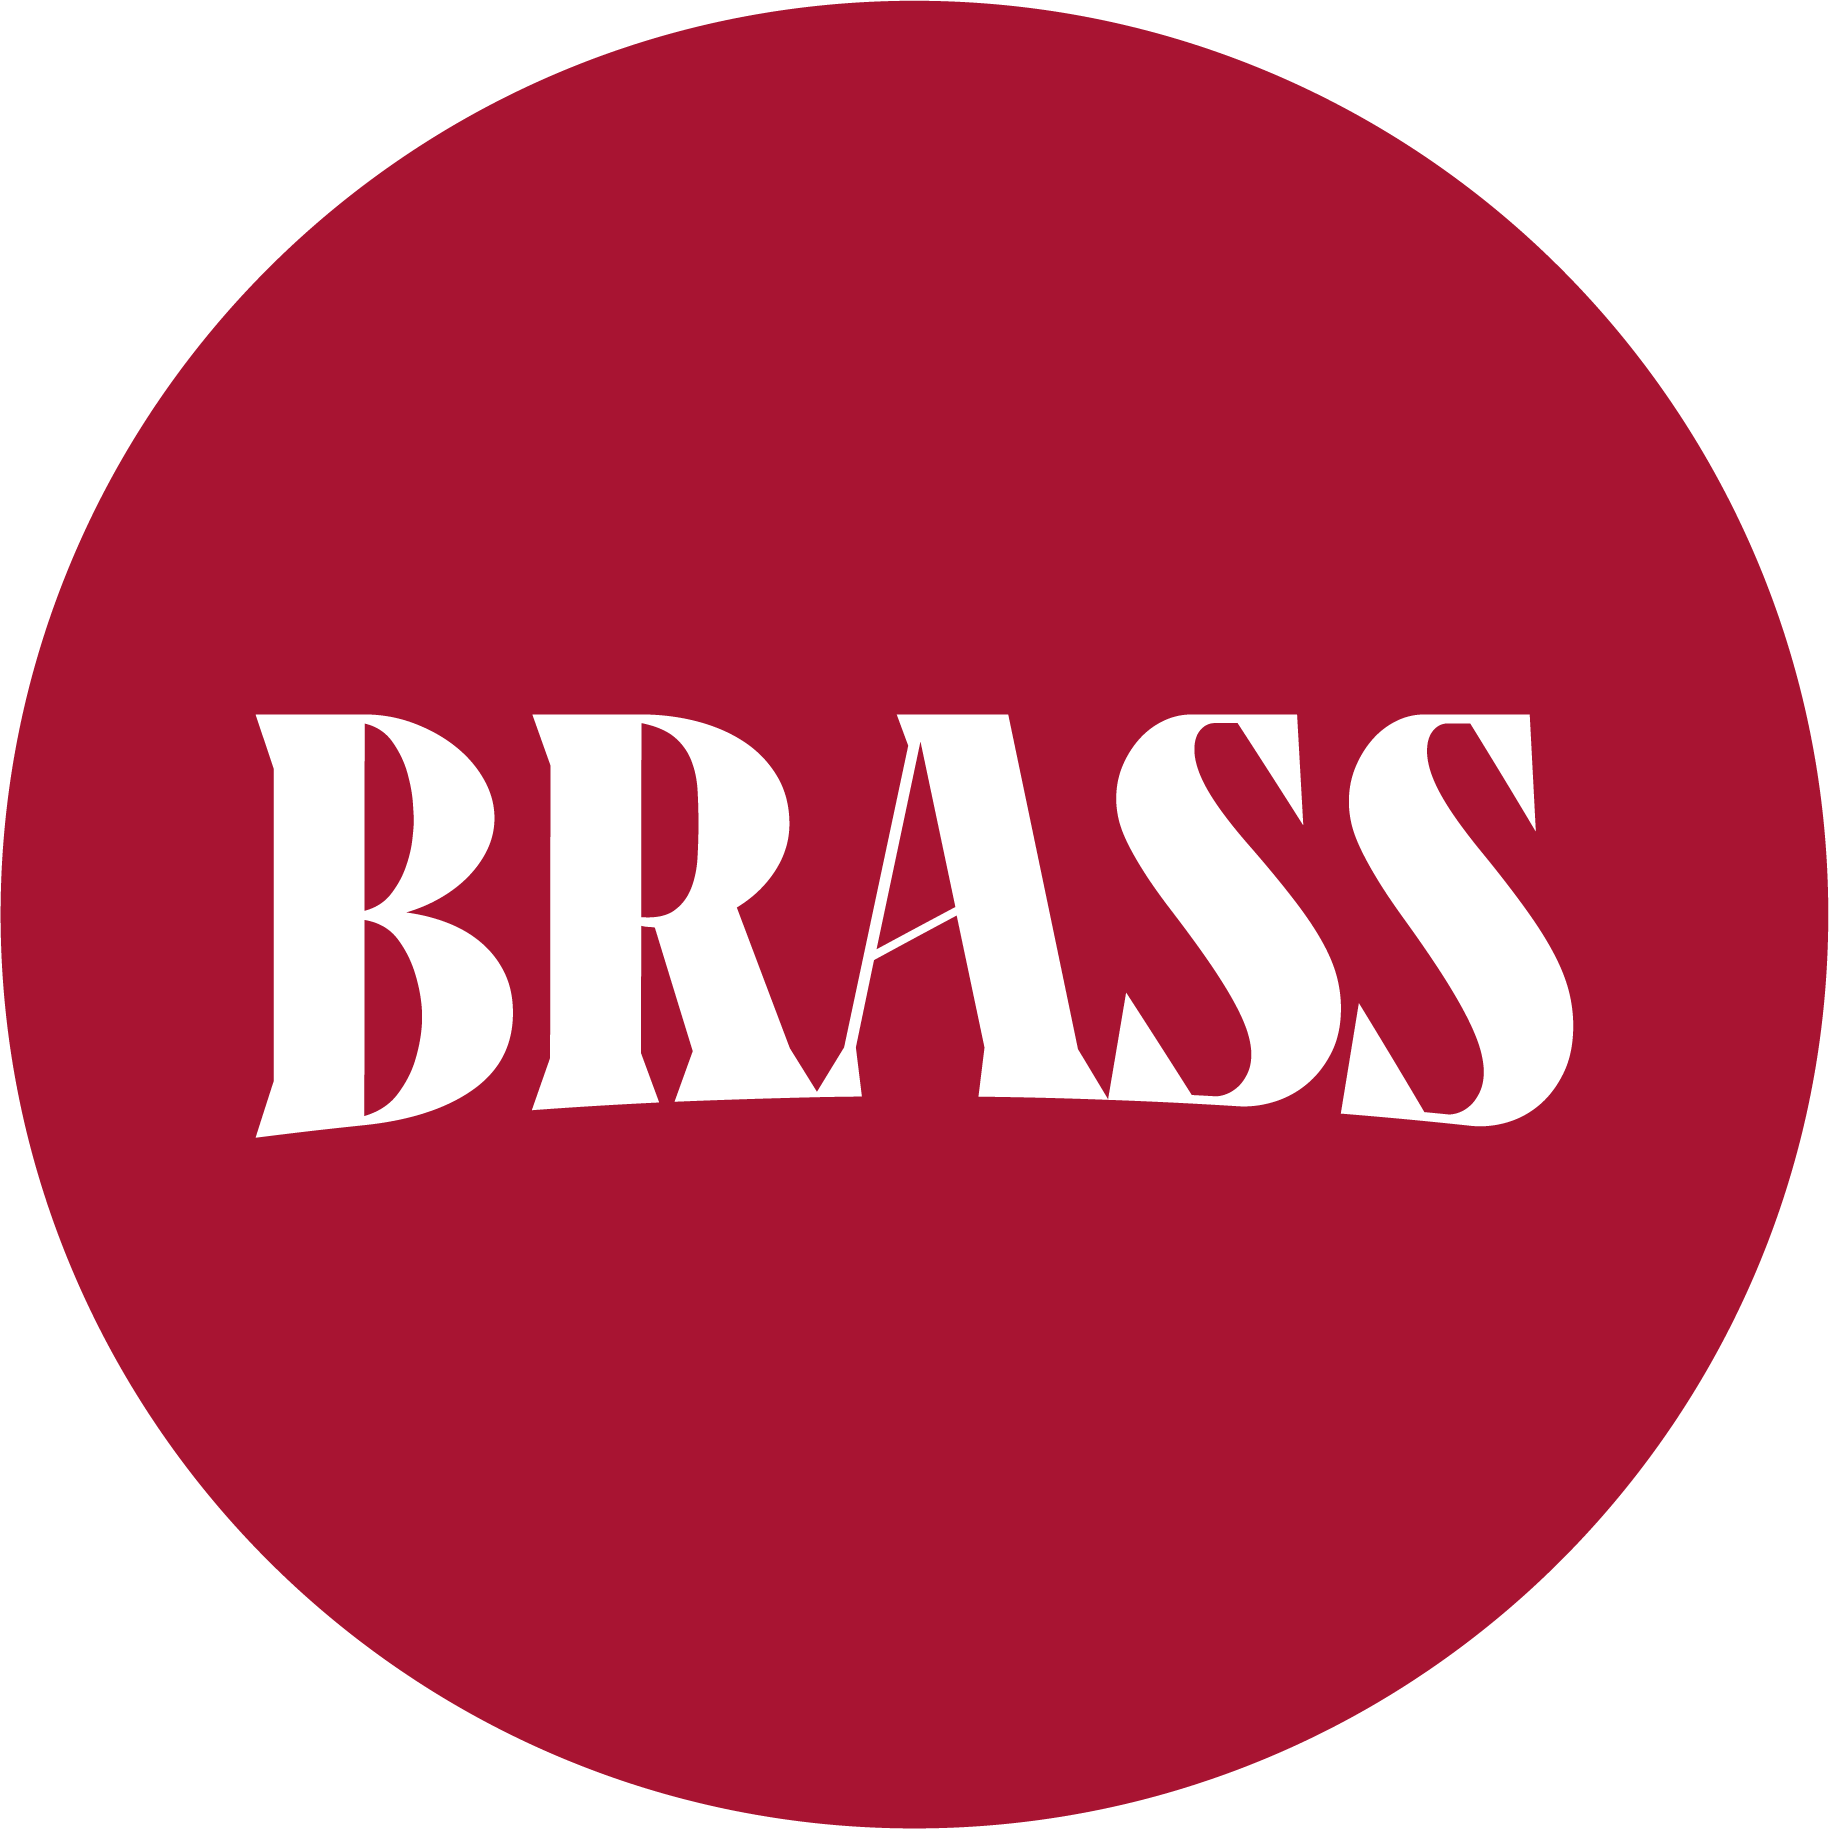 Brass Chile